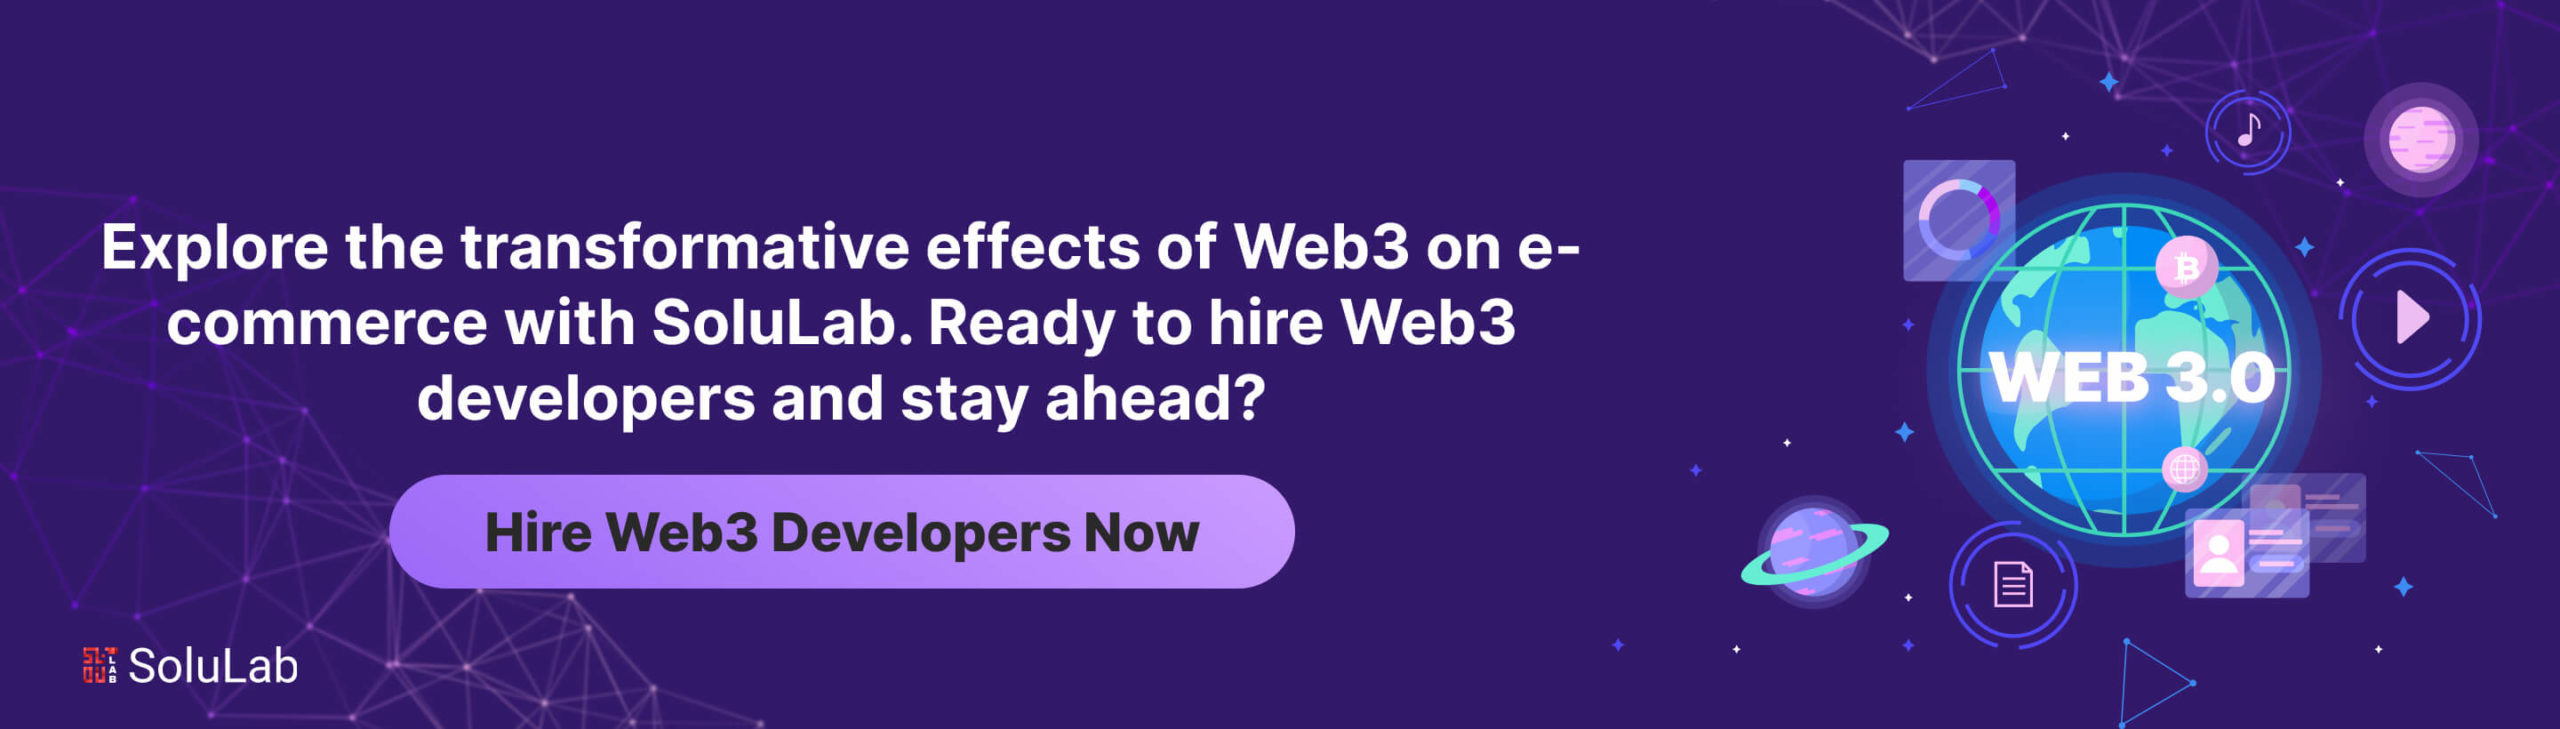 Hire Web3 Developers